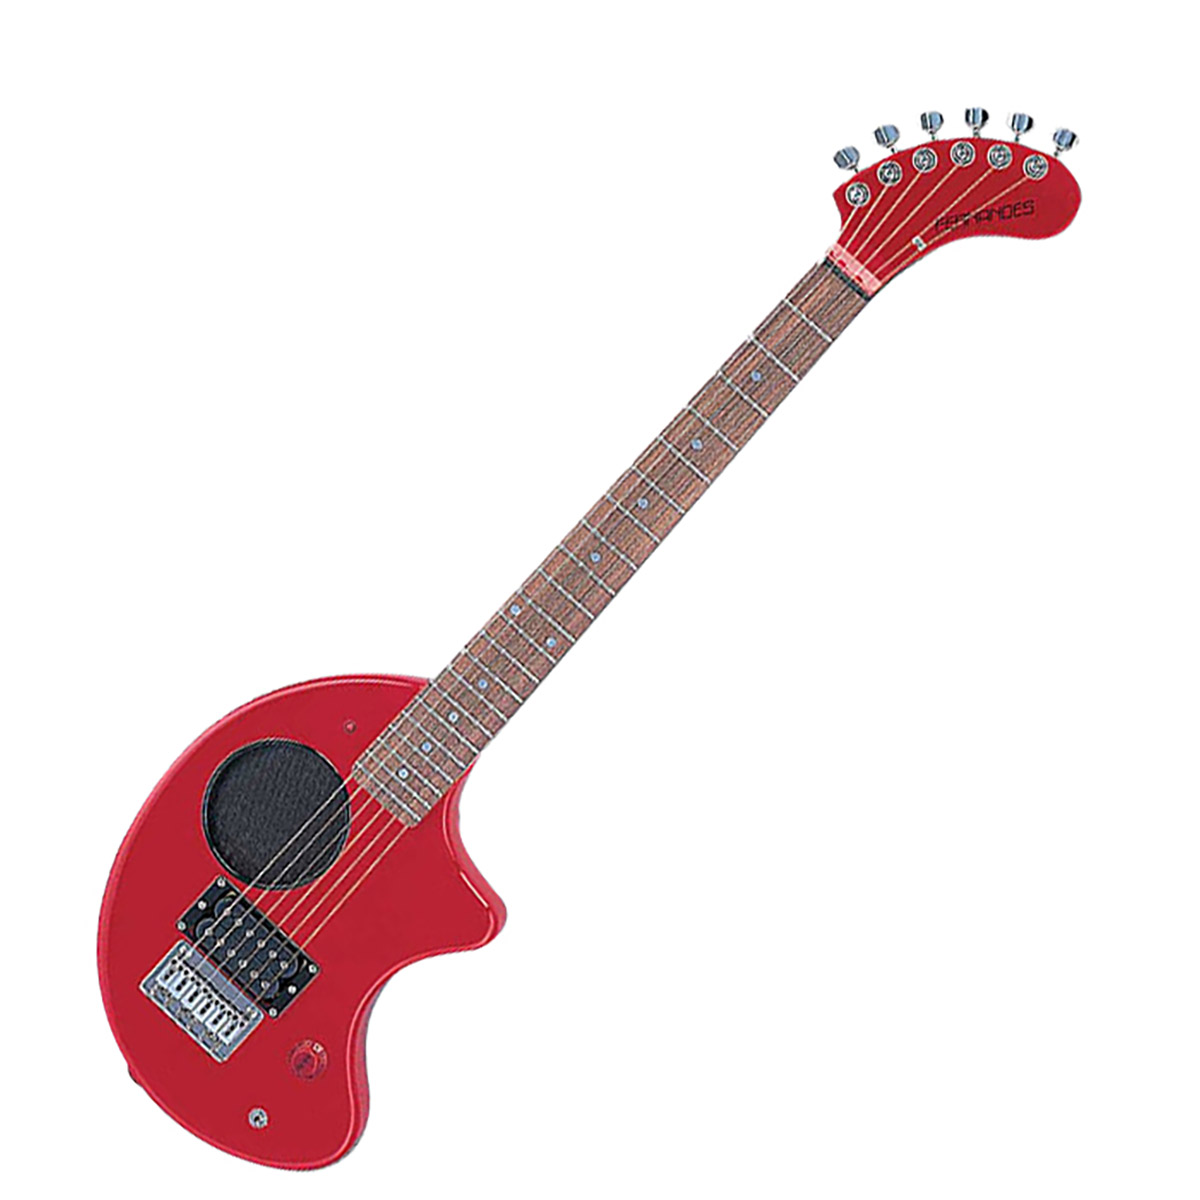 FERNANDES ZO-3 RED スピーカー内蔵ミニエレキギター レッド ソフトケース付き フェルナンデス ゾウさんギター  島村楽器オンラインストア